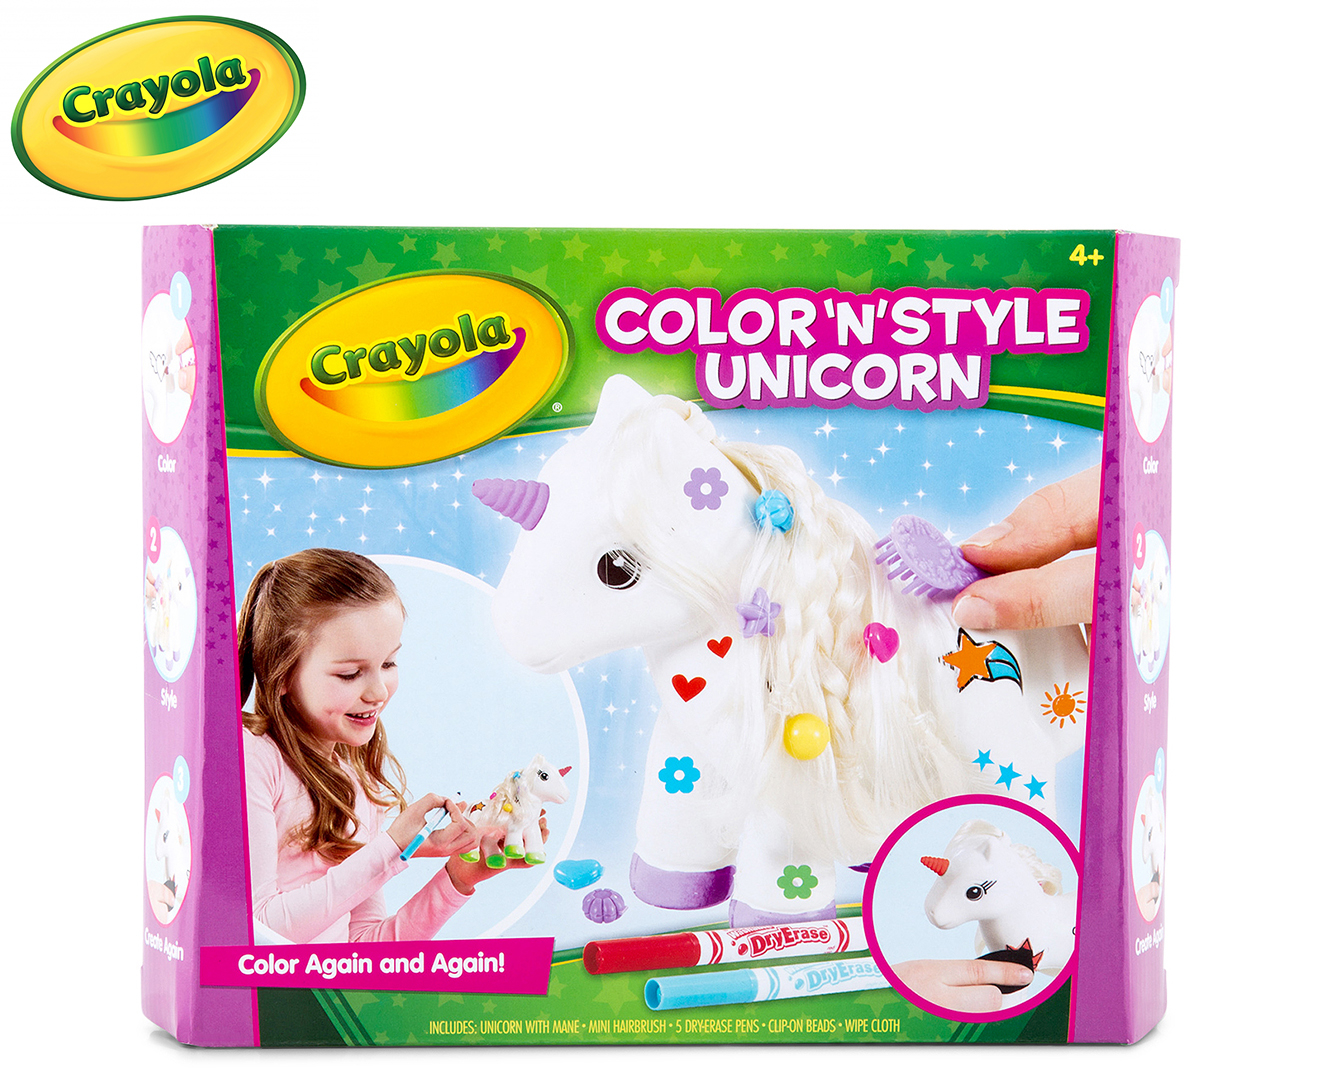  Crayola  Color  N Style Unicorn  Catch com au